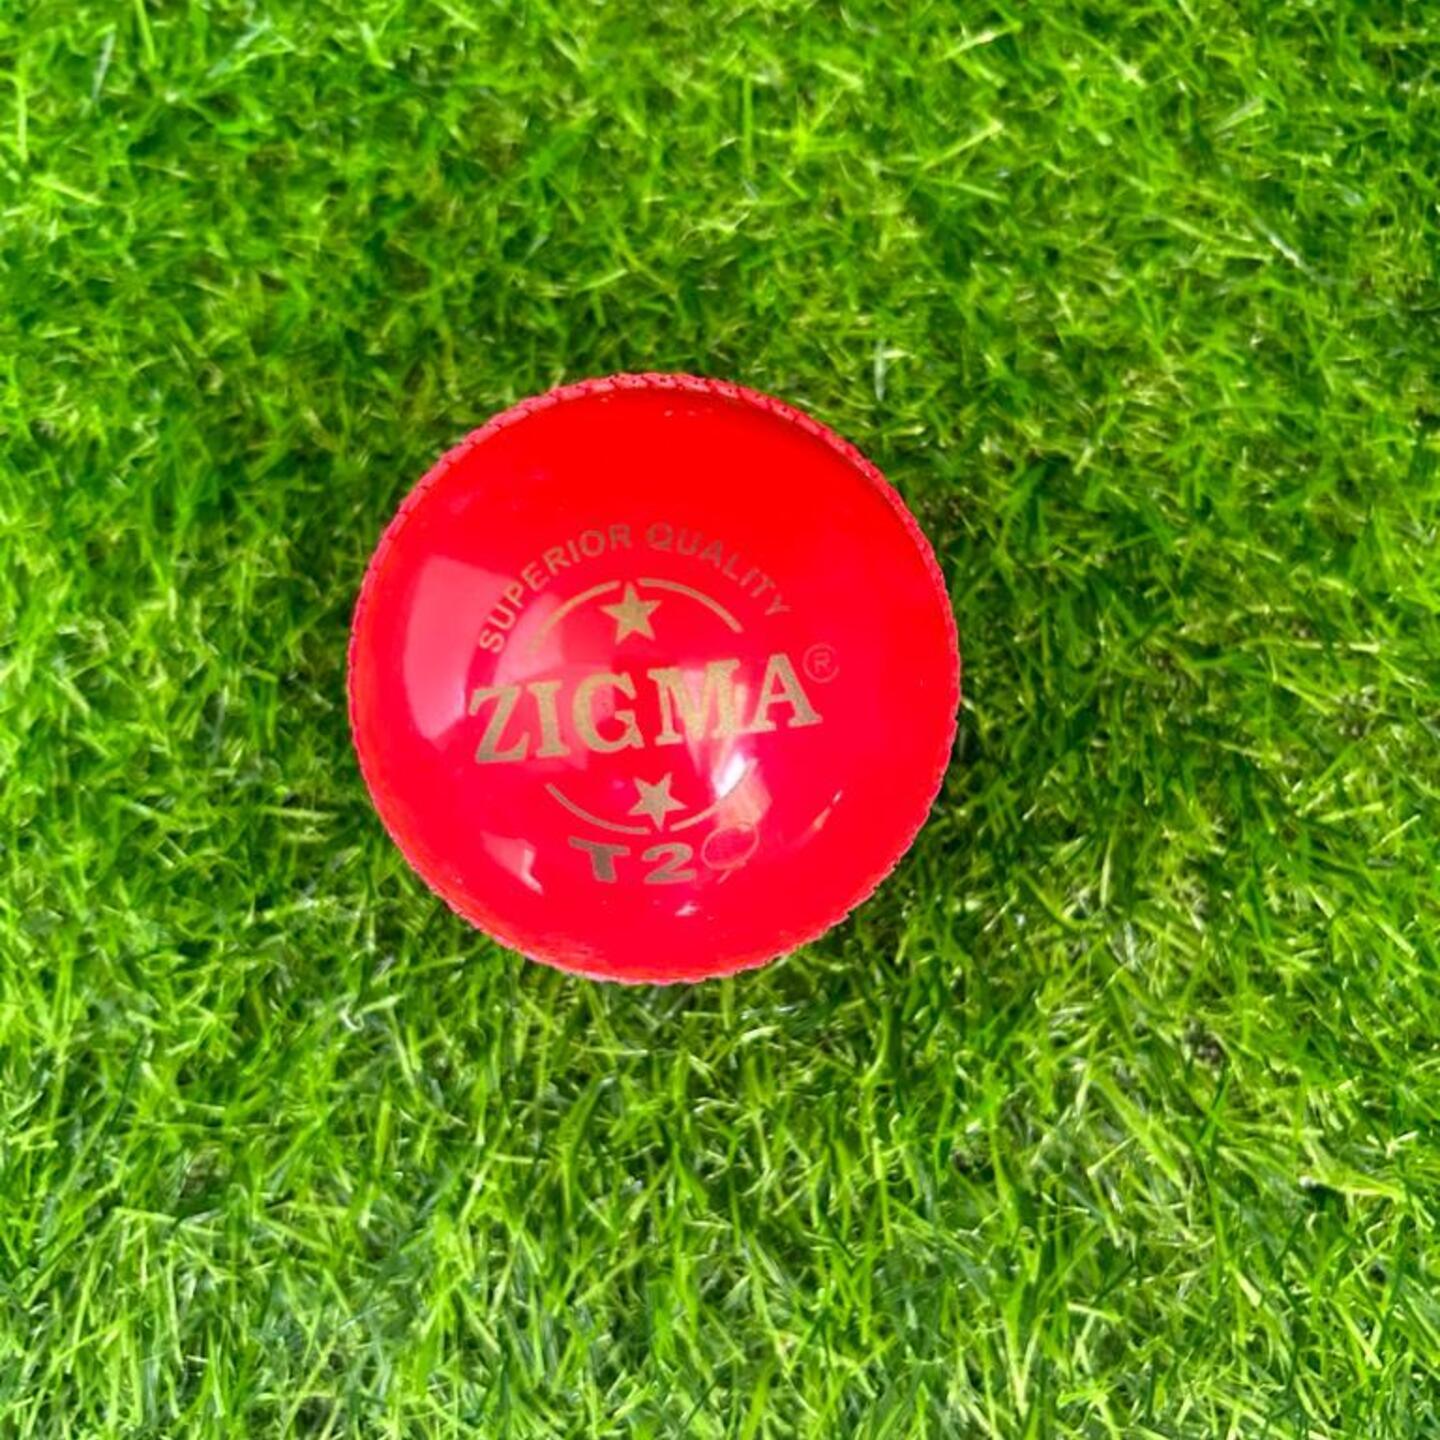 ZIGMA T20 PVC BALL RED | CRICKET PRACTICE BALL